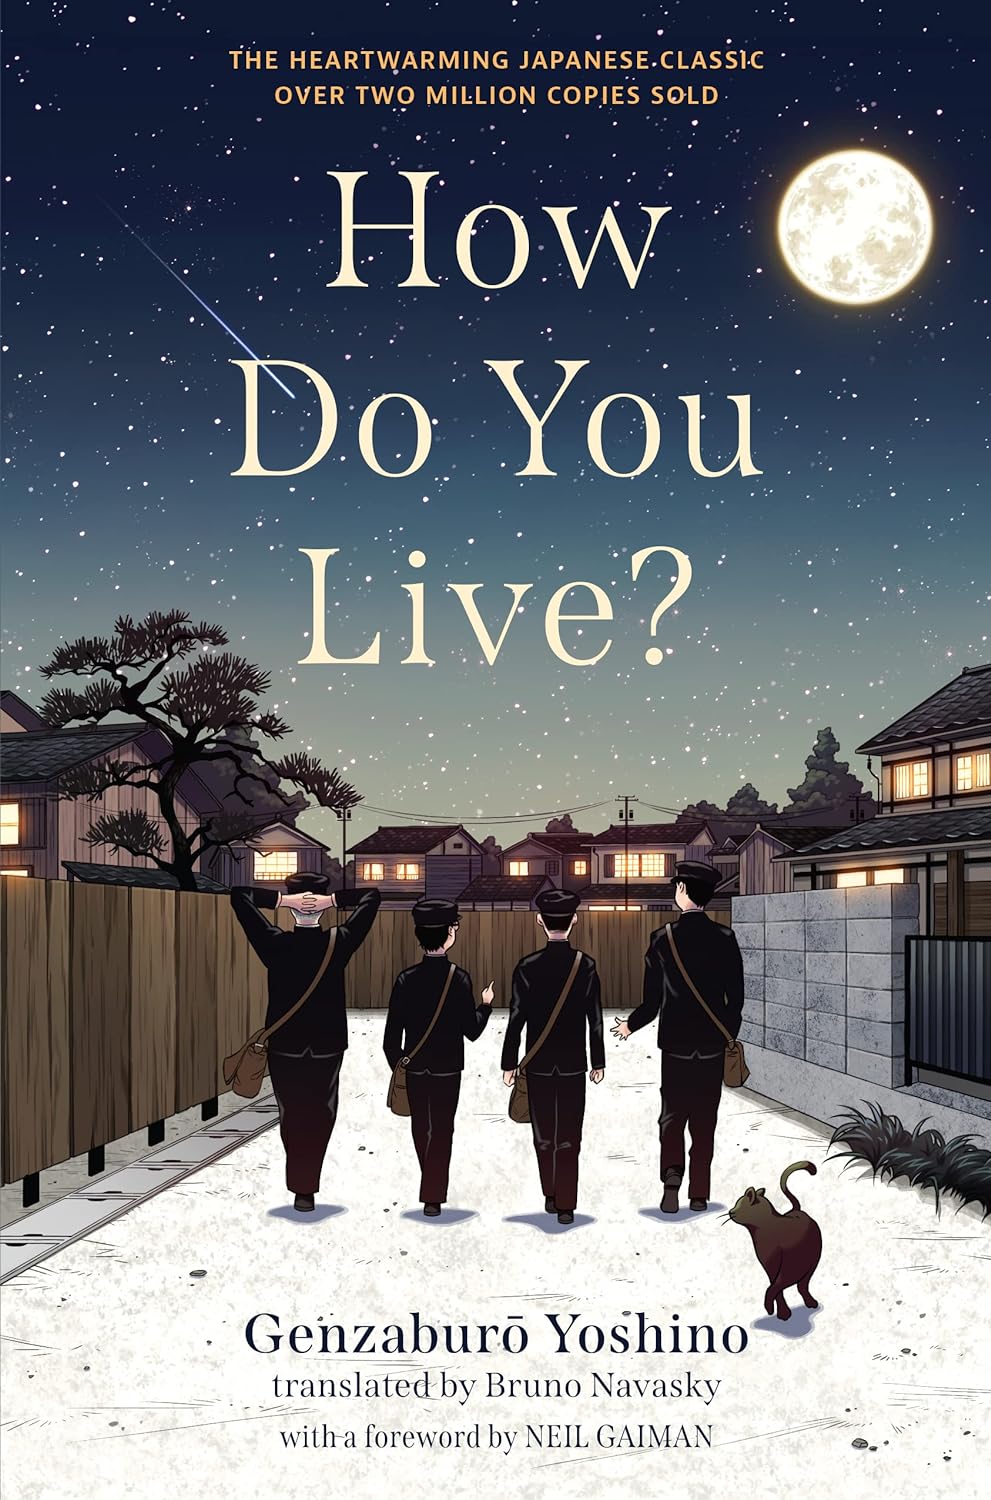 Neil Gaiman, Genzaburo Yoshino, Bruno Navasky: How Do You Live? (2021, Algonquin Books of Chapel Hill)